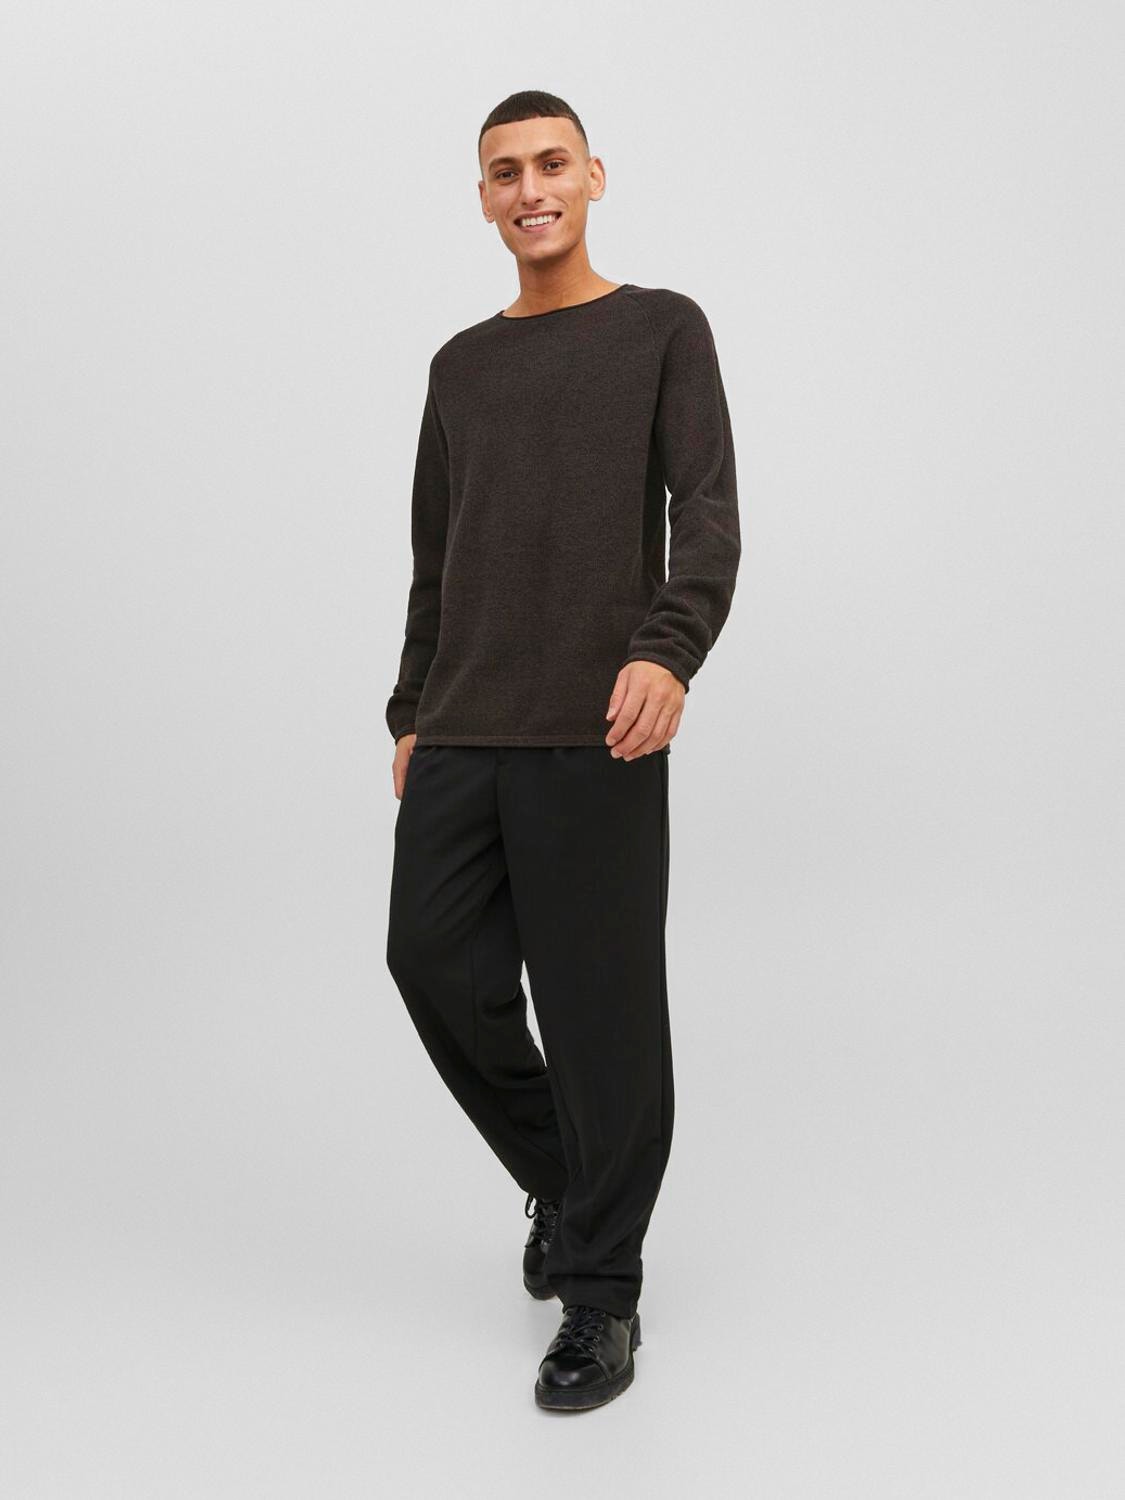 Jack & Jones Plain Knitted pullover -Seal Brown - 12157321